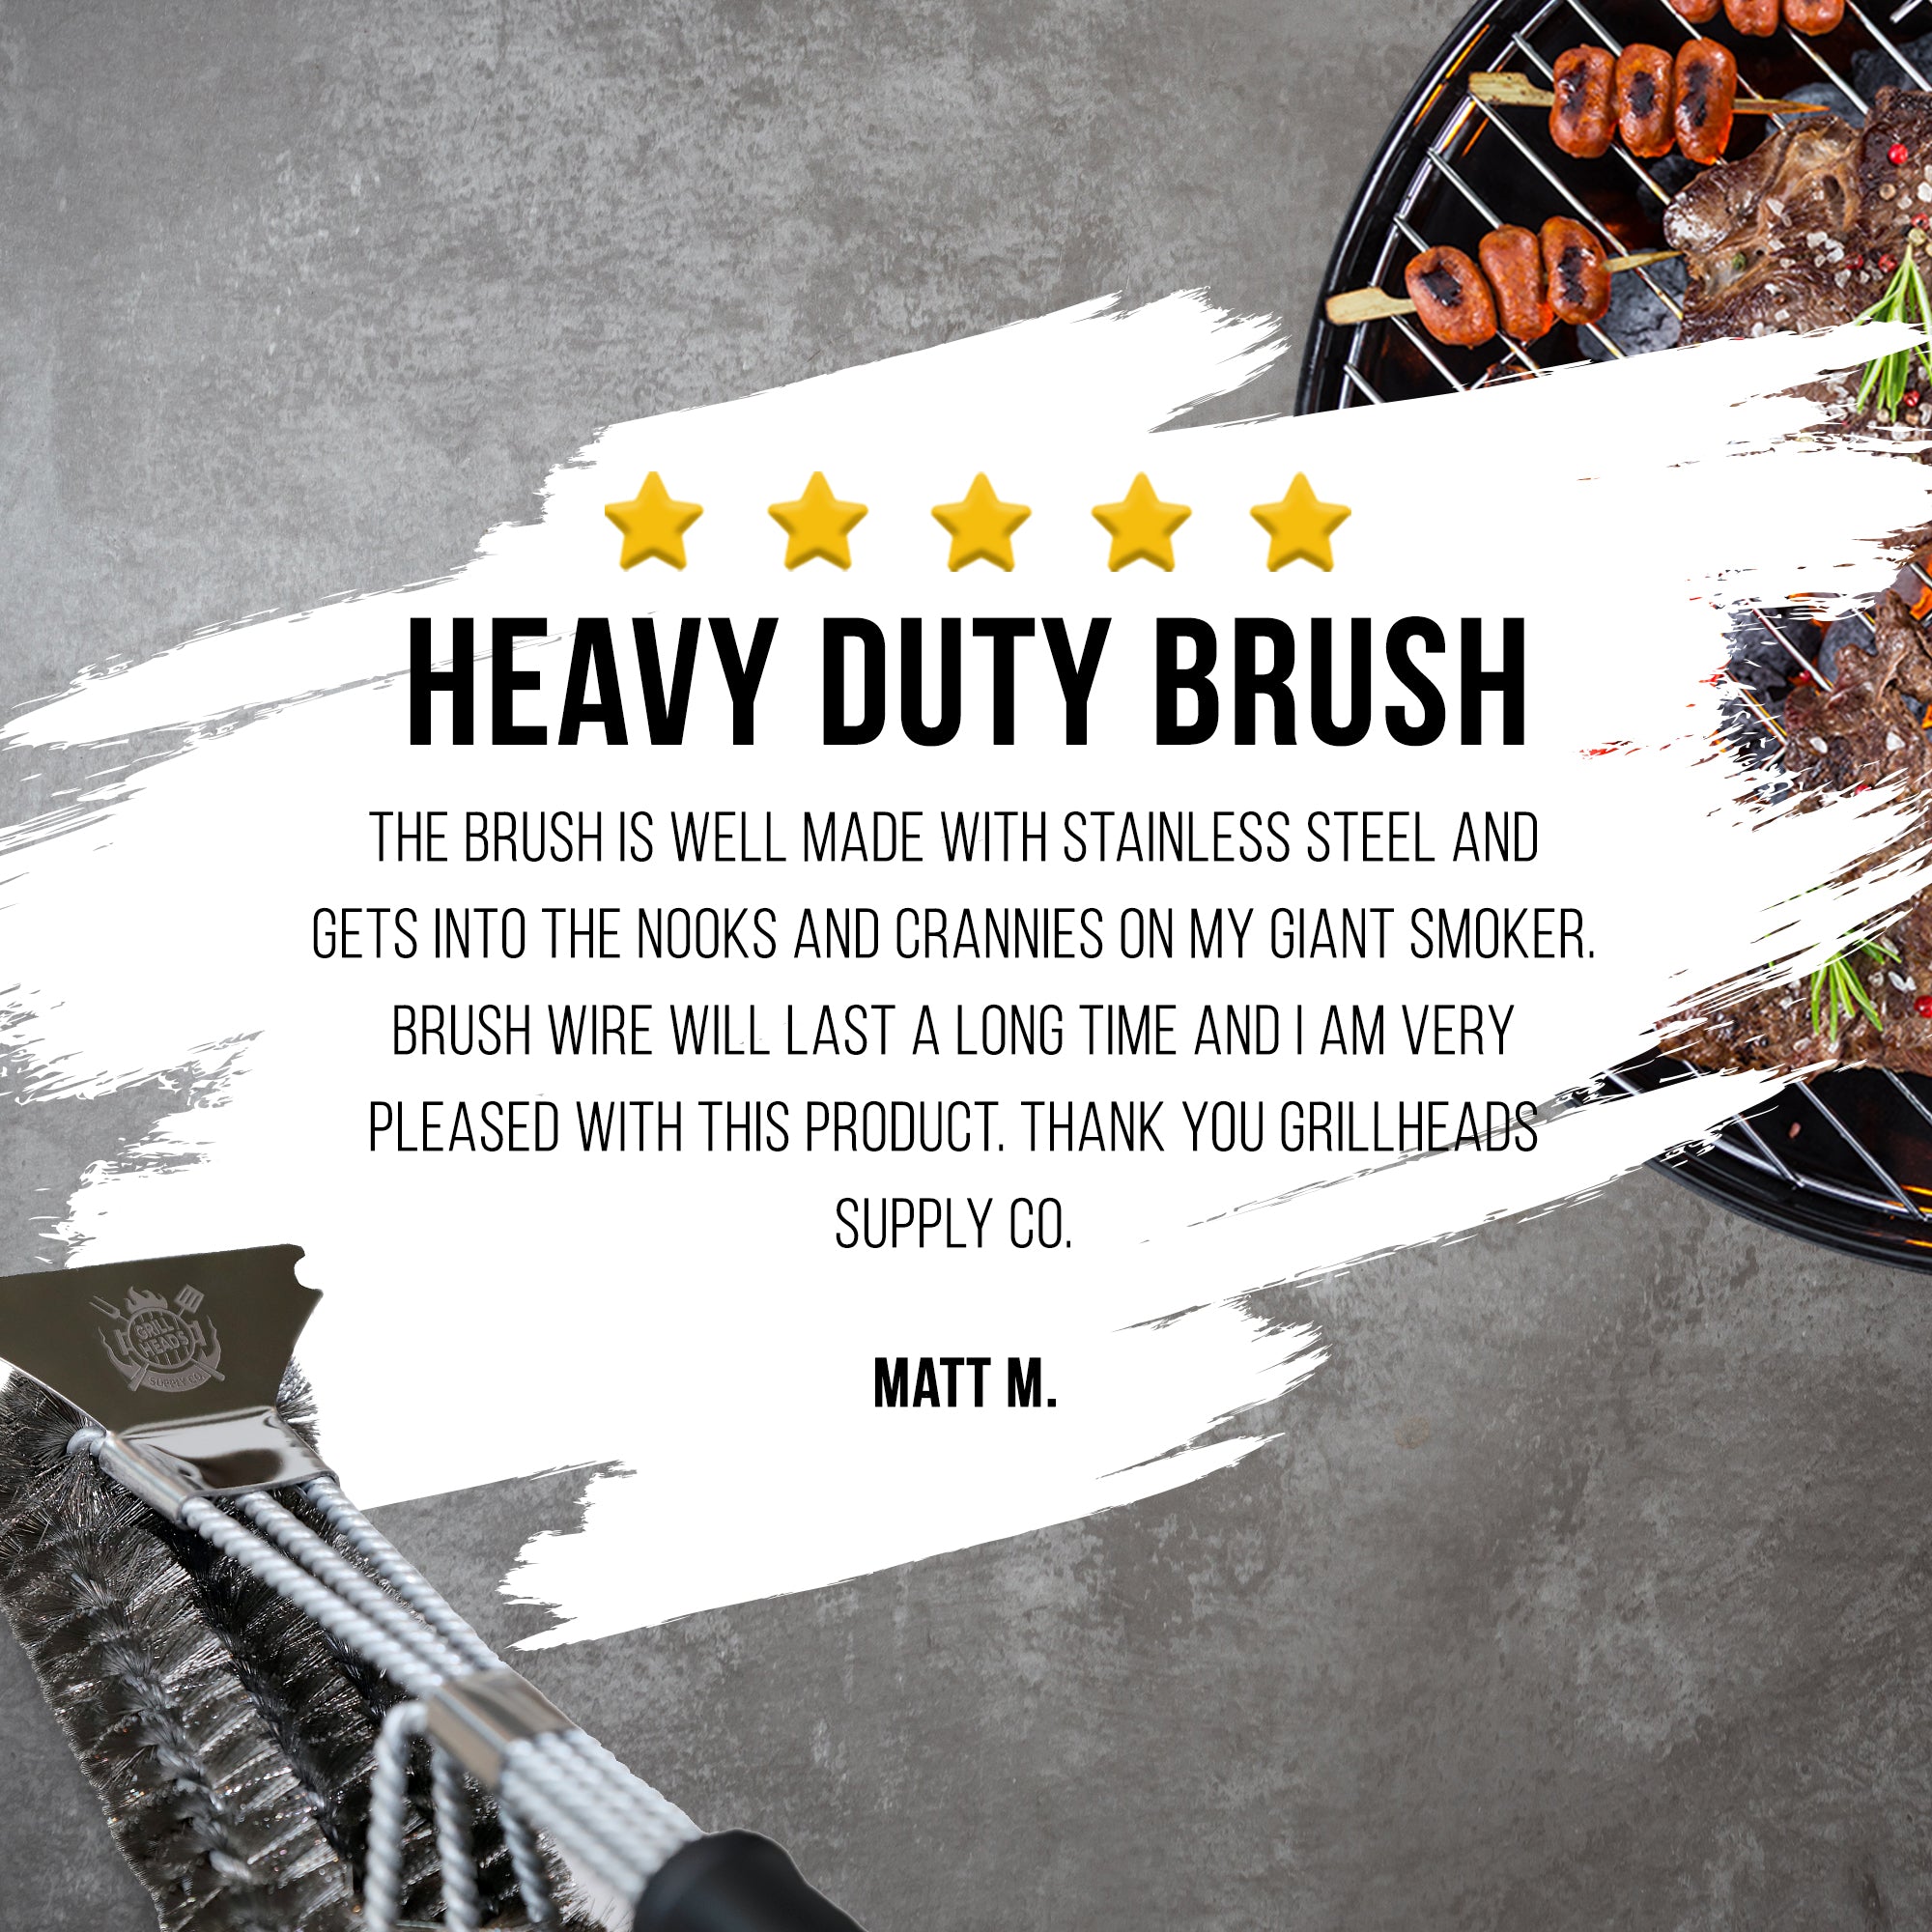 Premium Grill Brush & Scraper  Ultimate BBQ Cleaning Solution